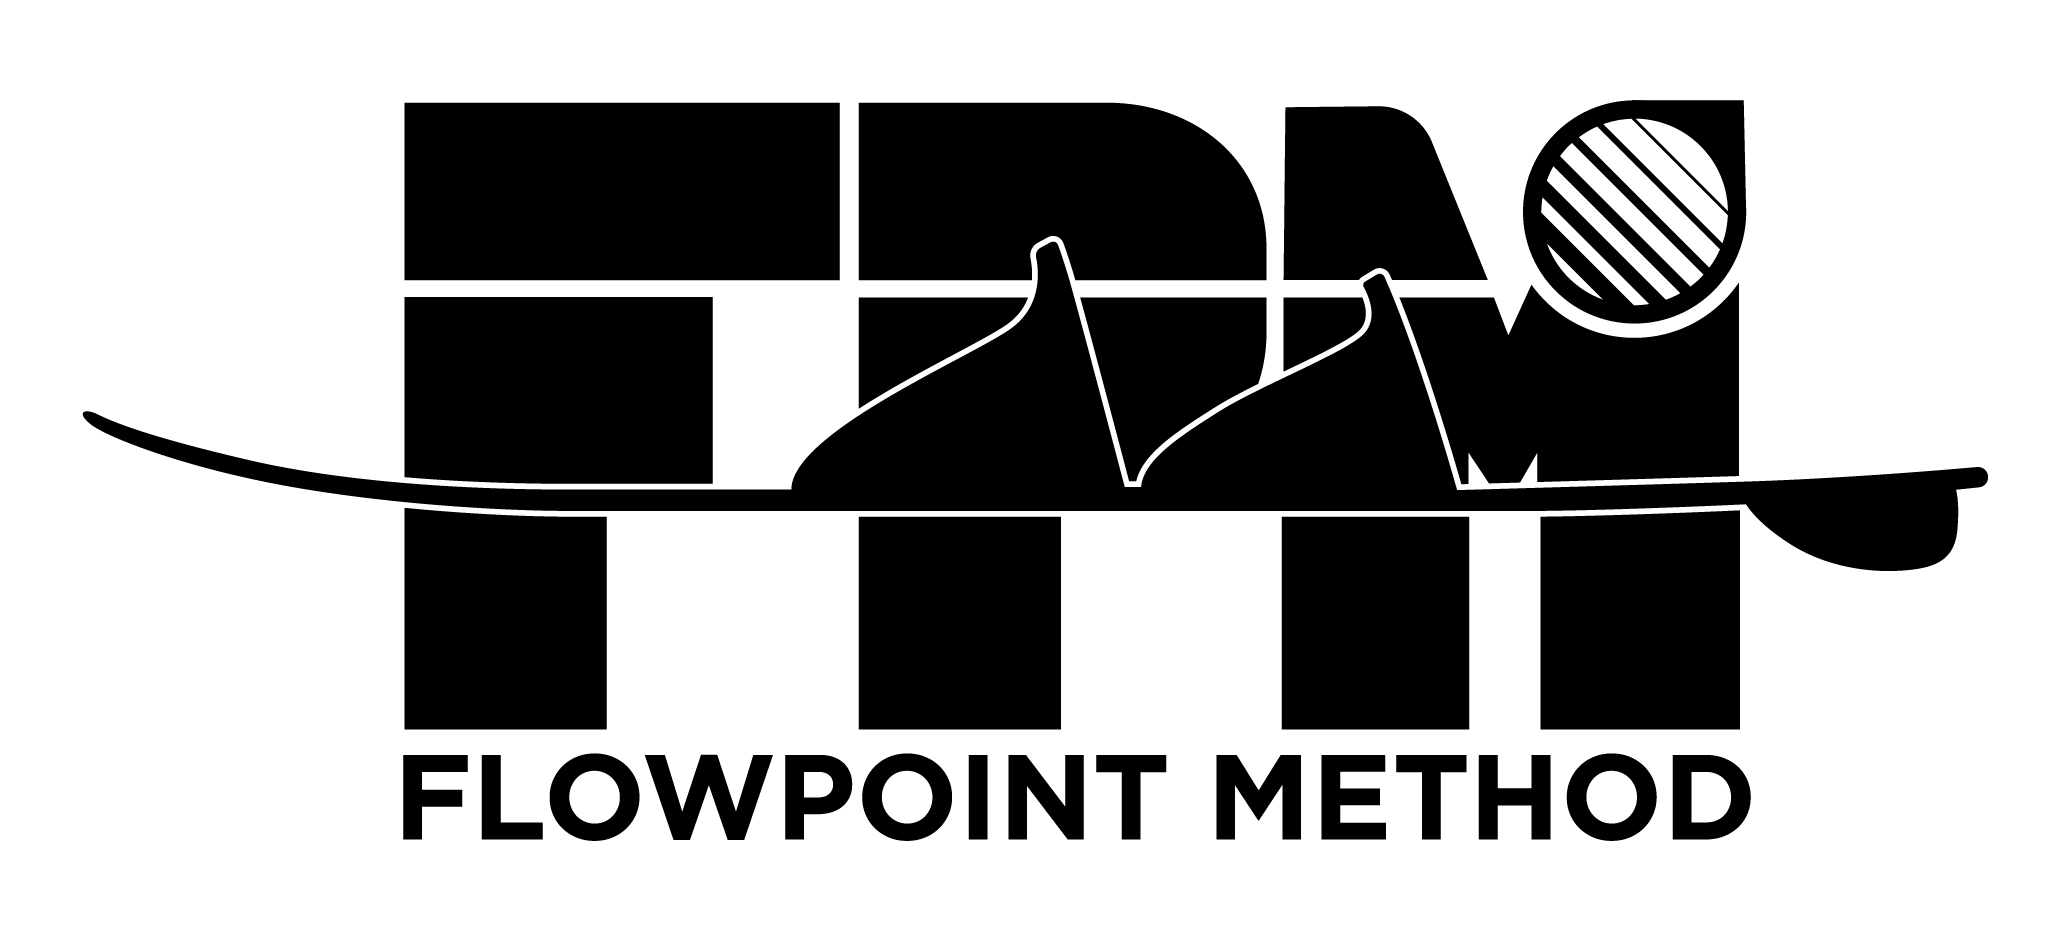 flowpoint method logo